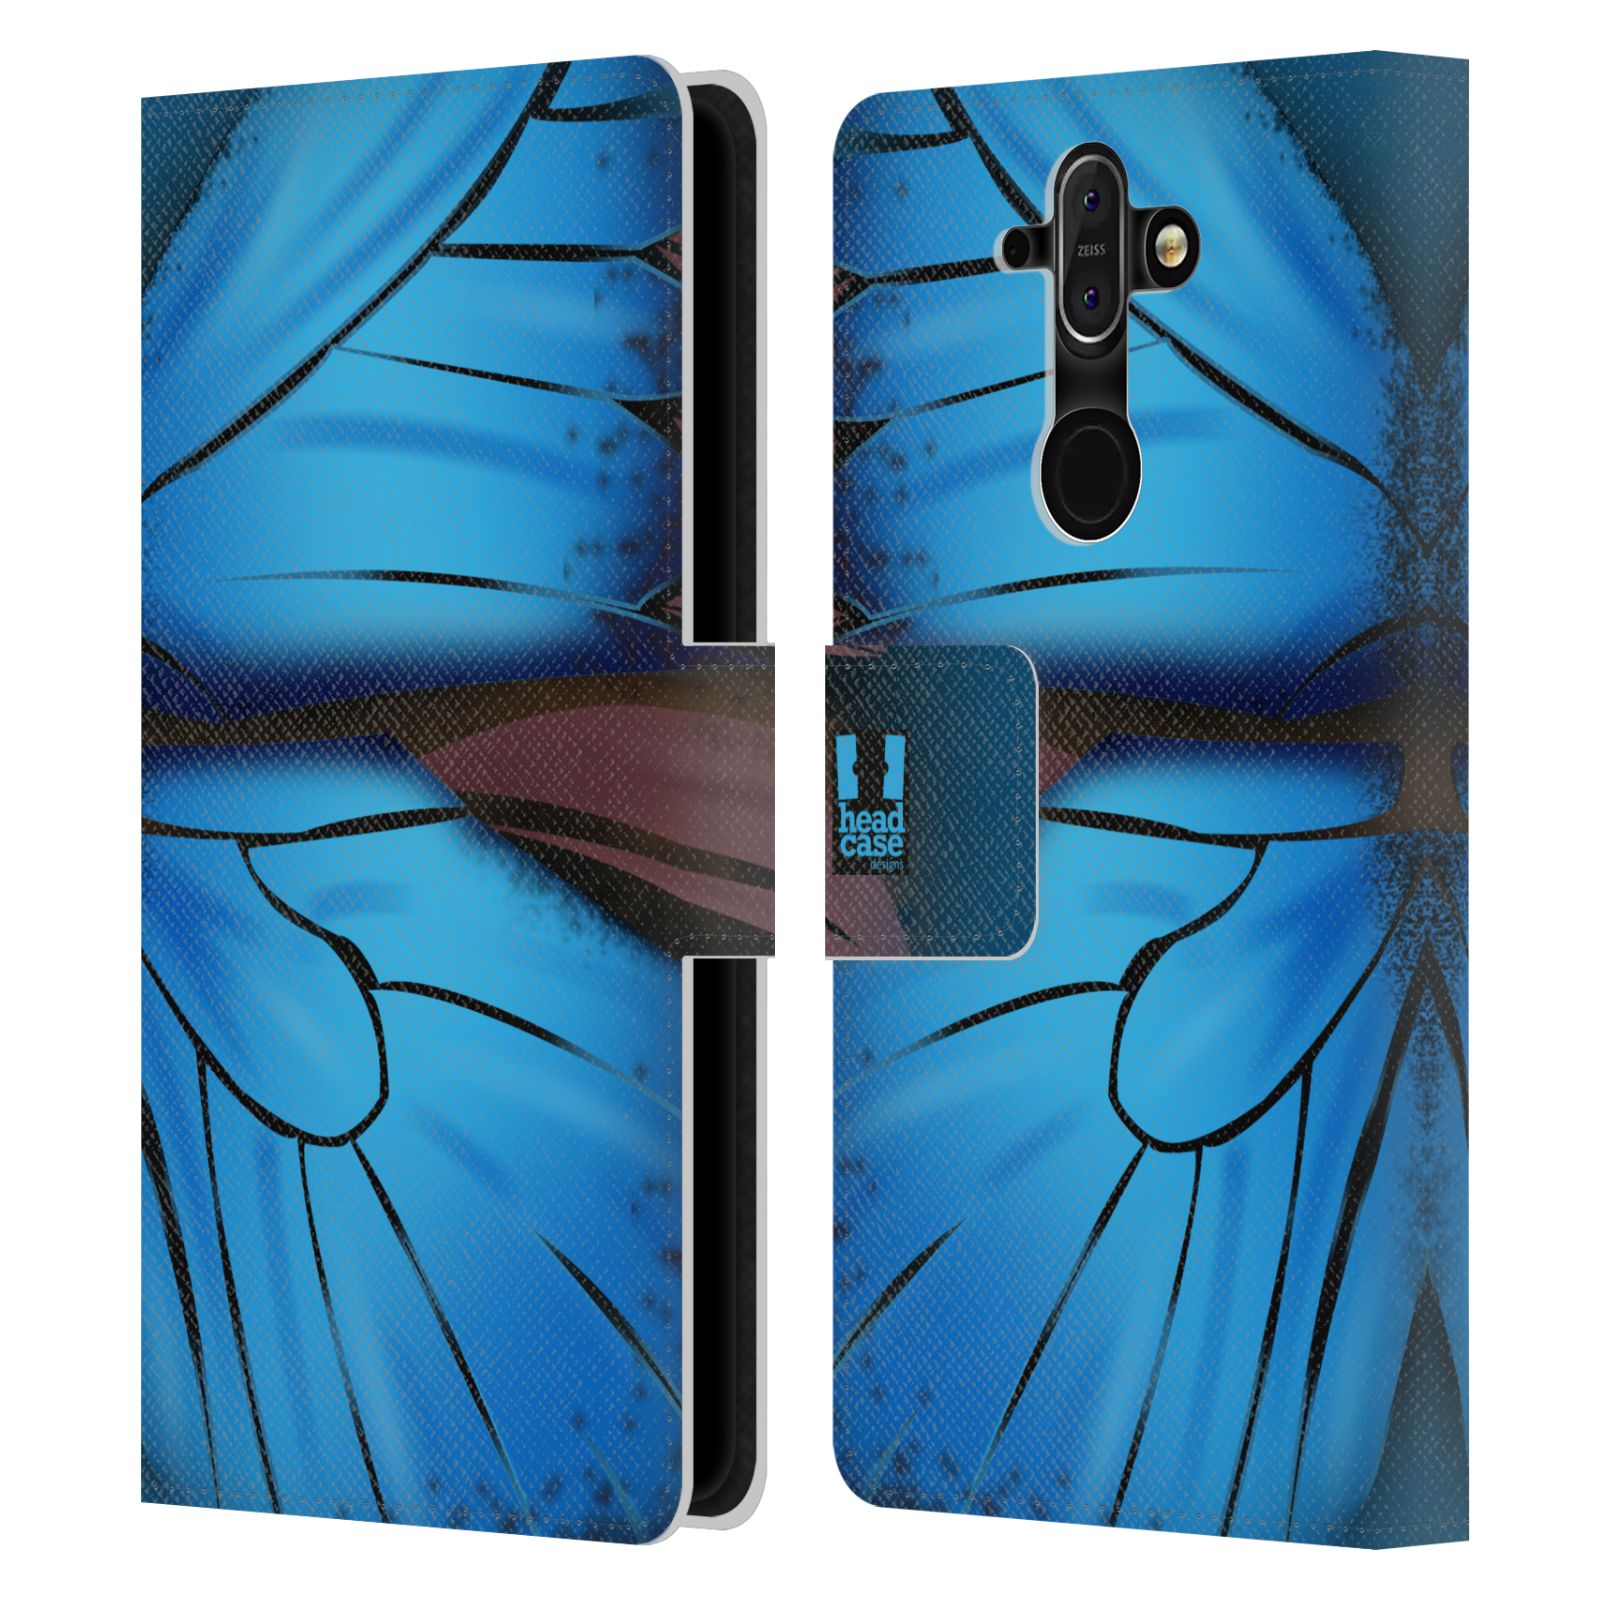 HEAD CASE Flipové pouzdro pro mobil Nokia 8 SIROCCO motýl a křídla kreslený vzor modrá barva